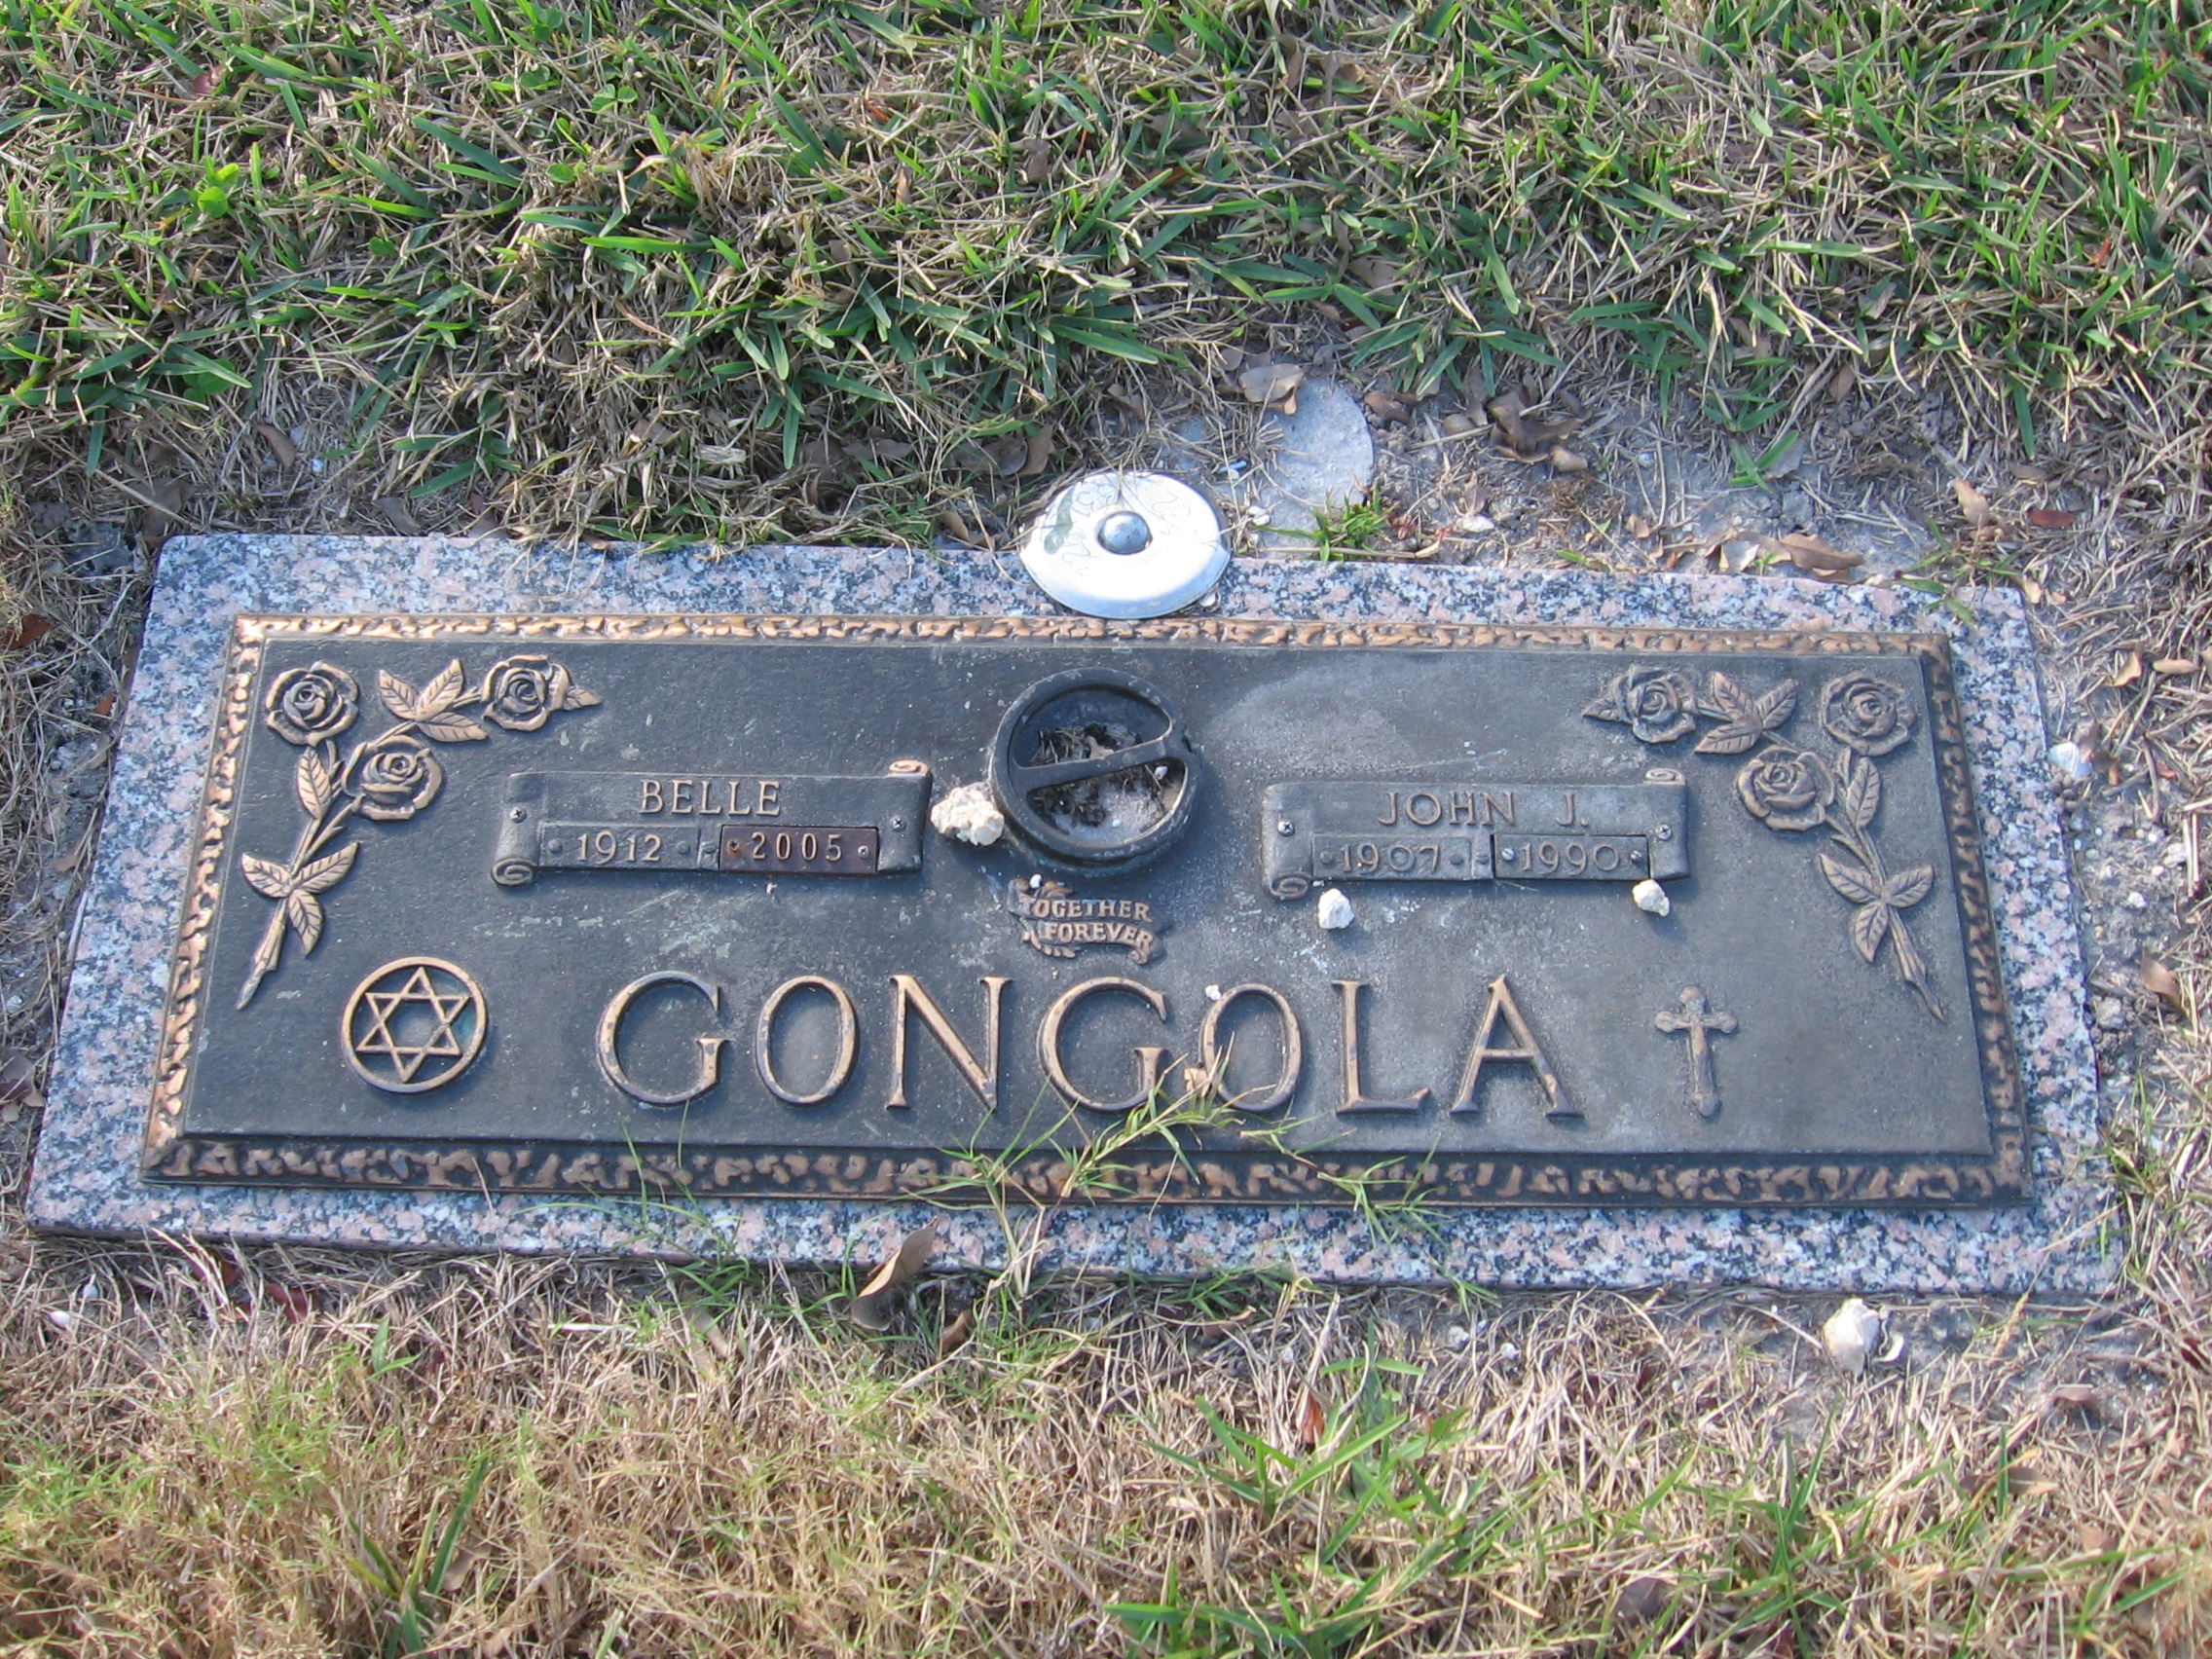 John J Gongola